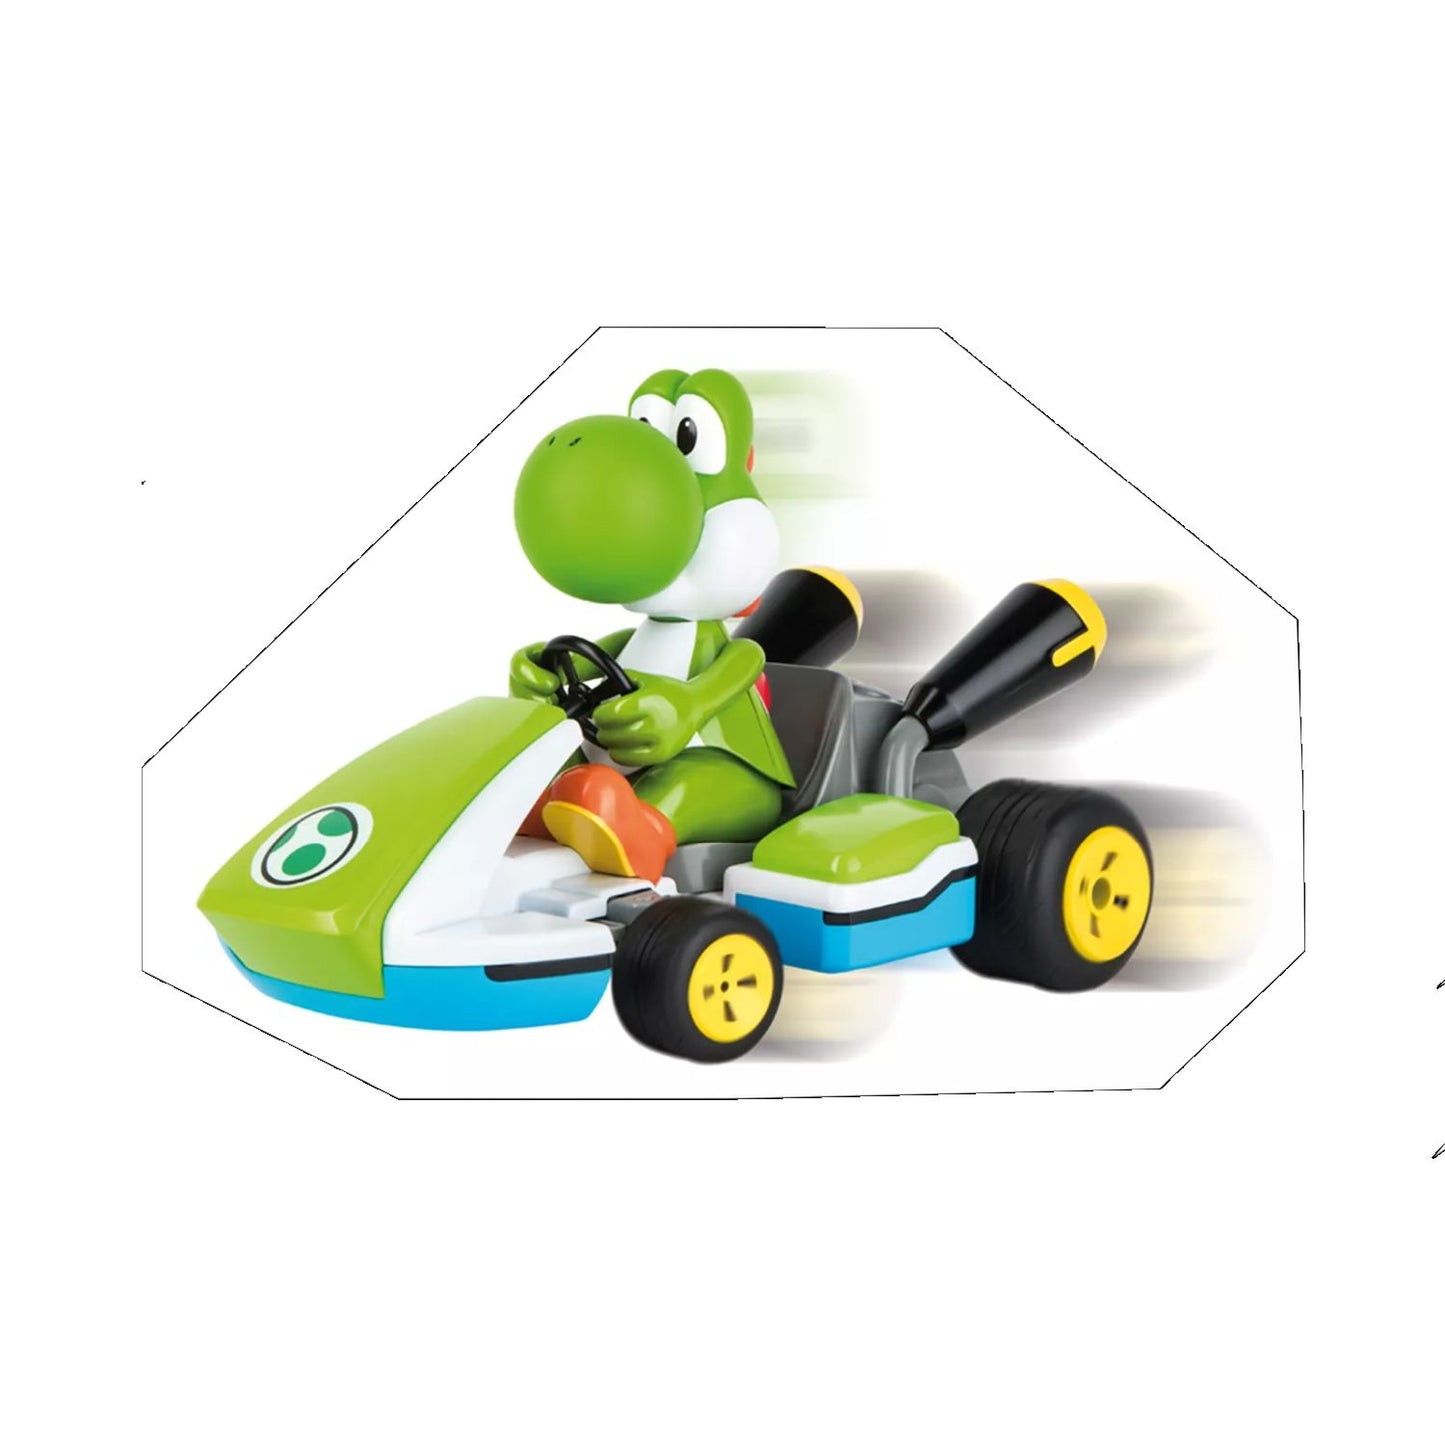 Carrera Mario Kart(Tm), Yoshi - Race Kart With Sound